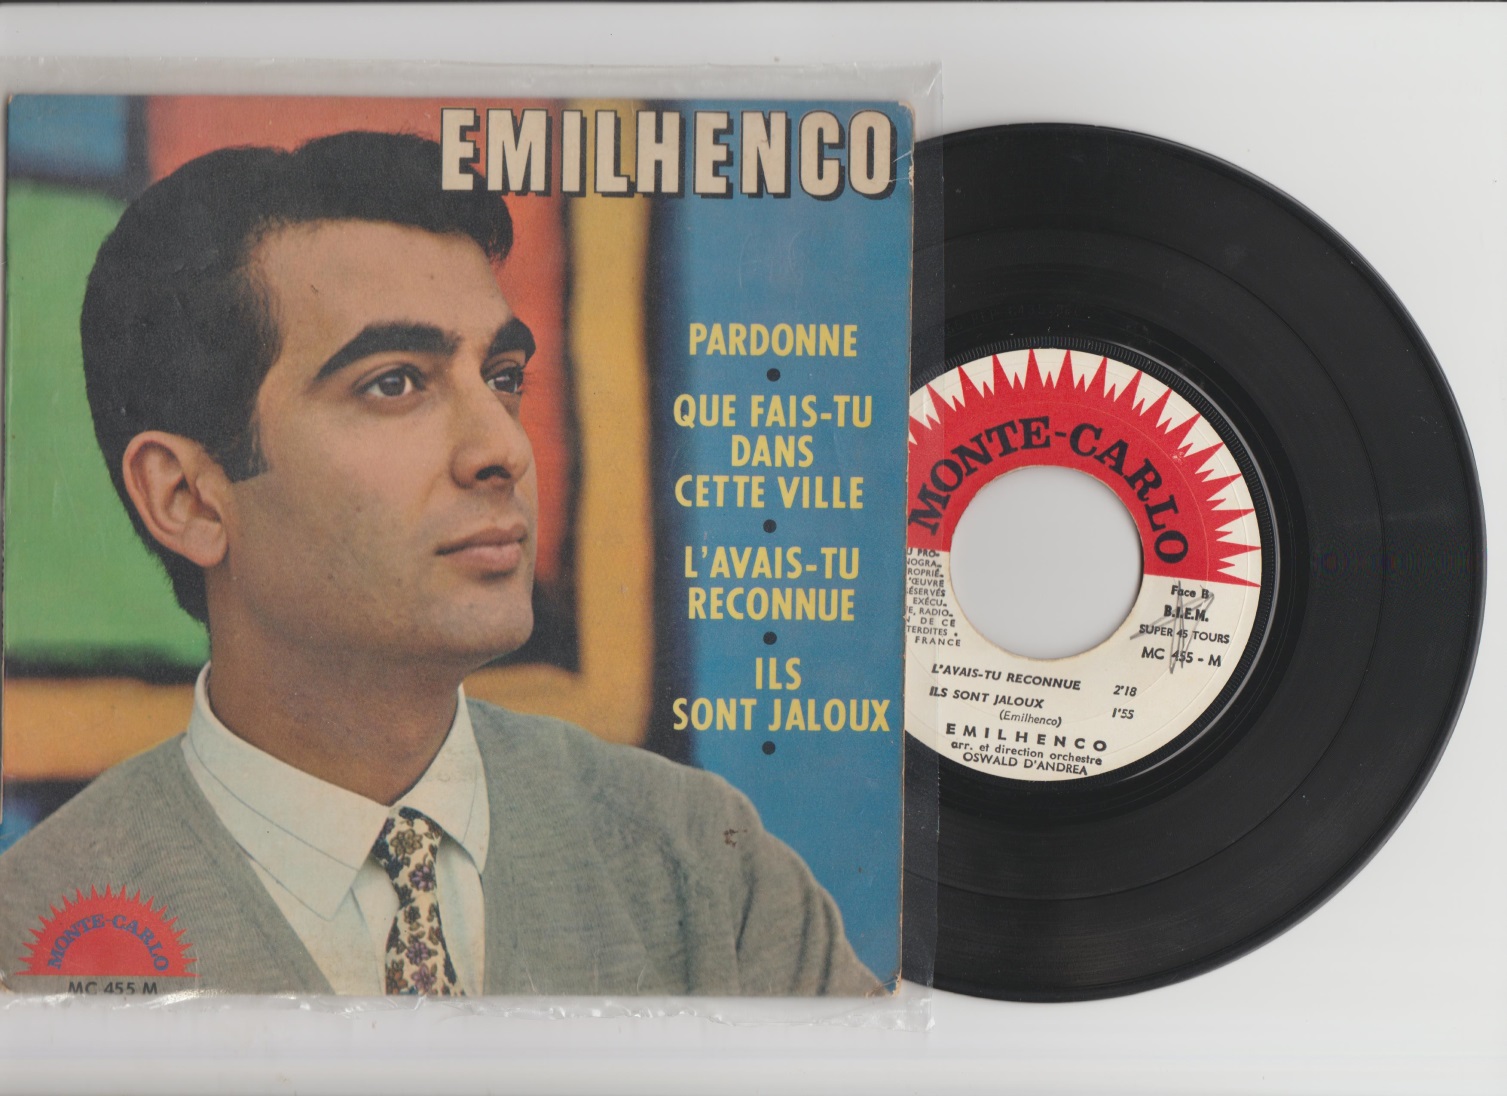 Emilhenco  label monté-carlo 1966.jpg